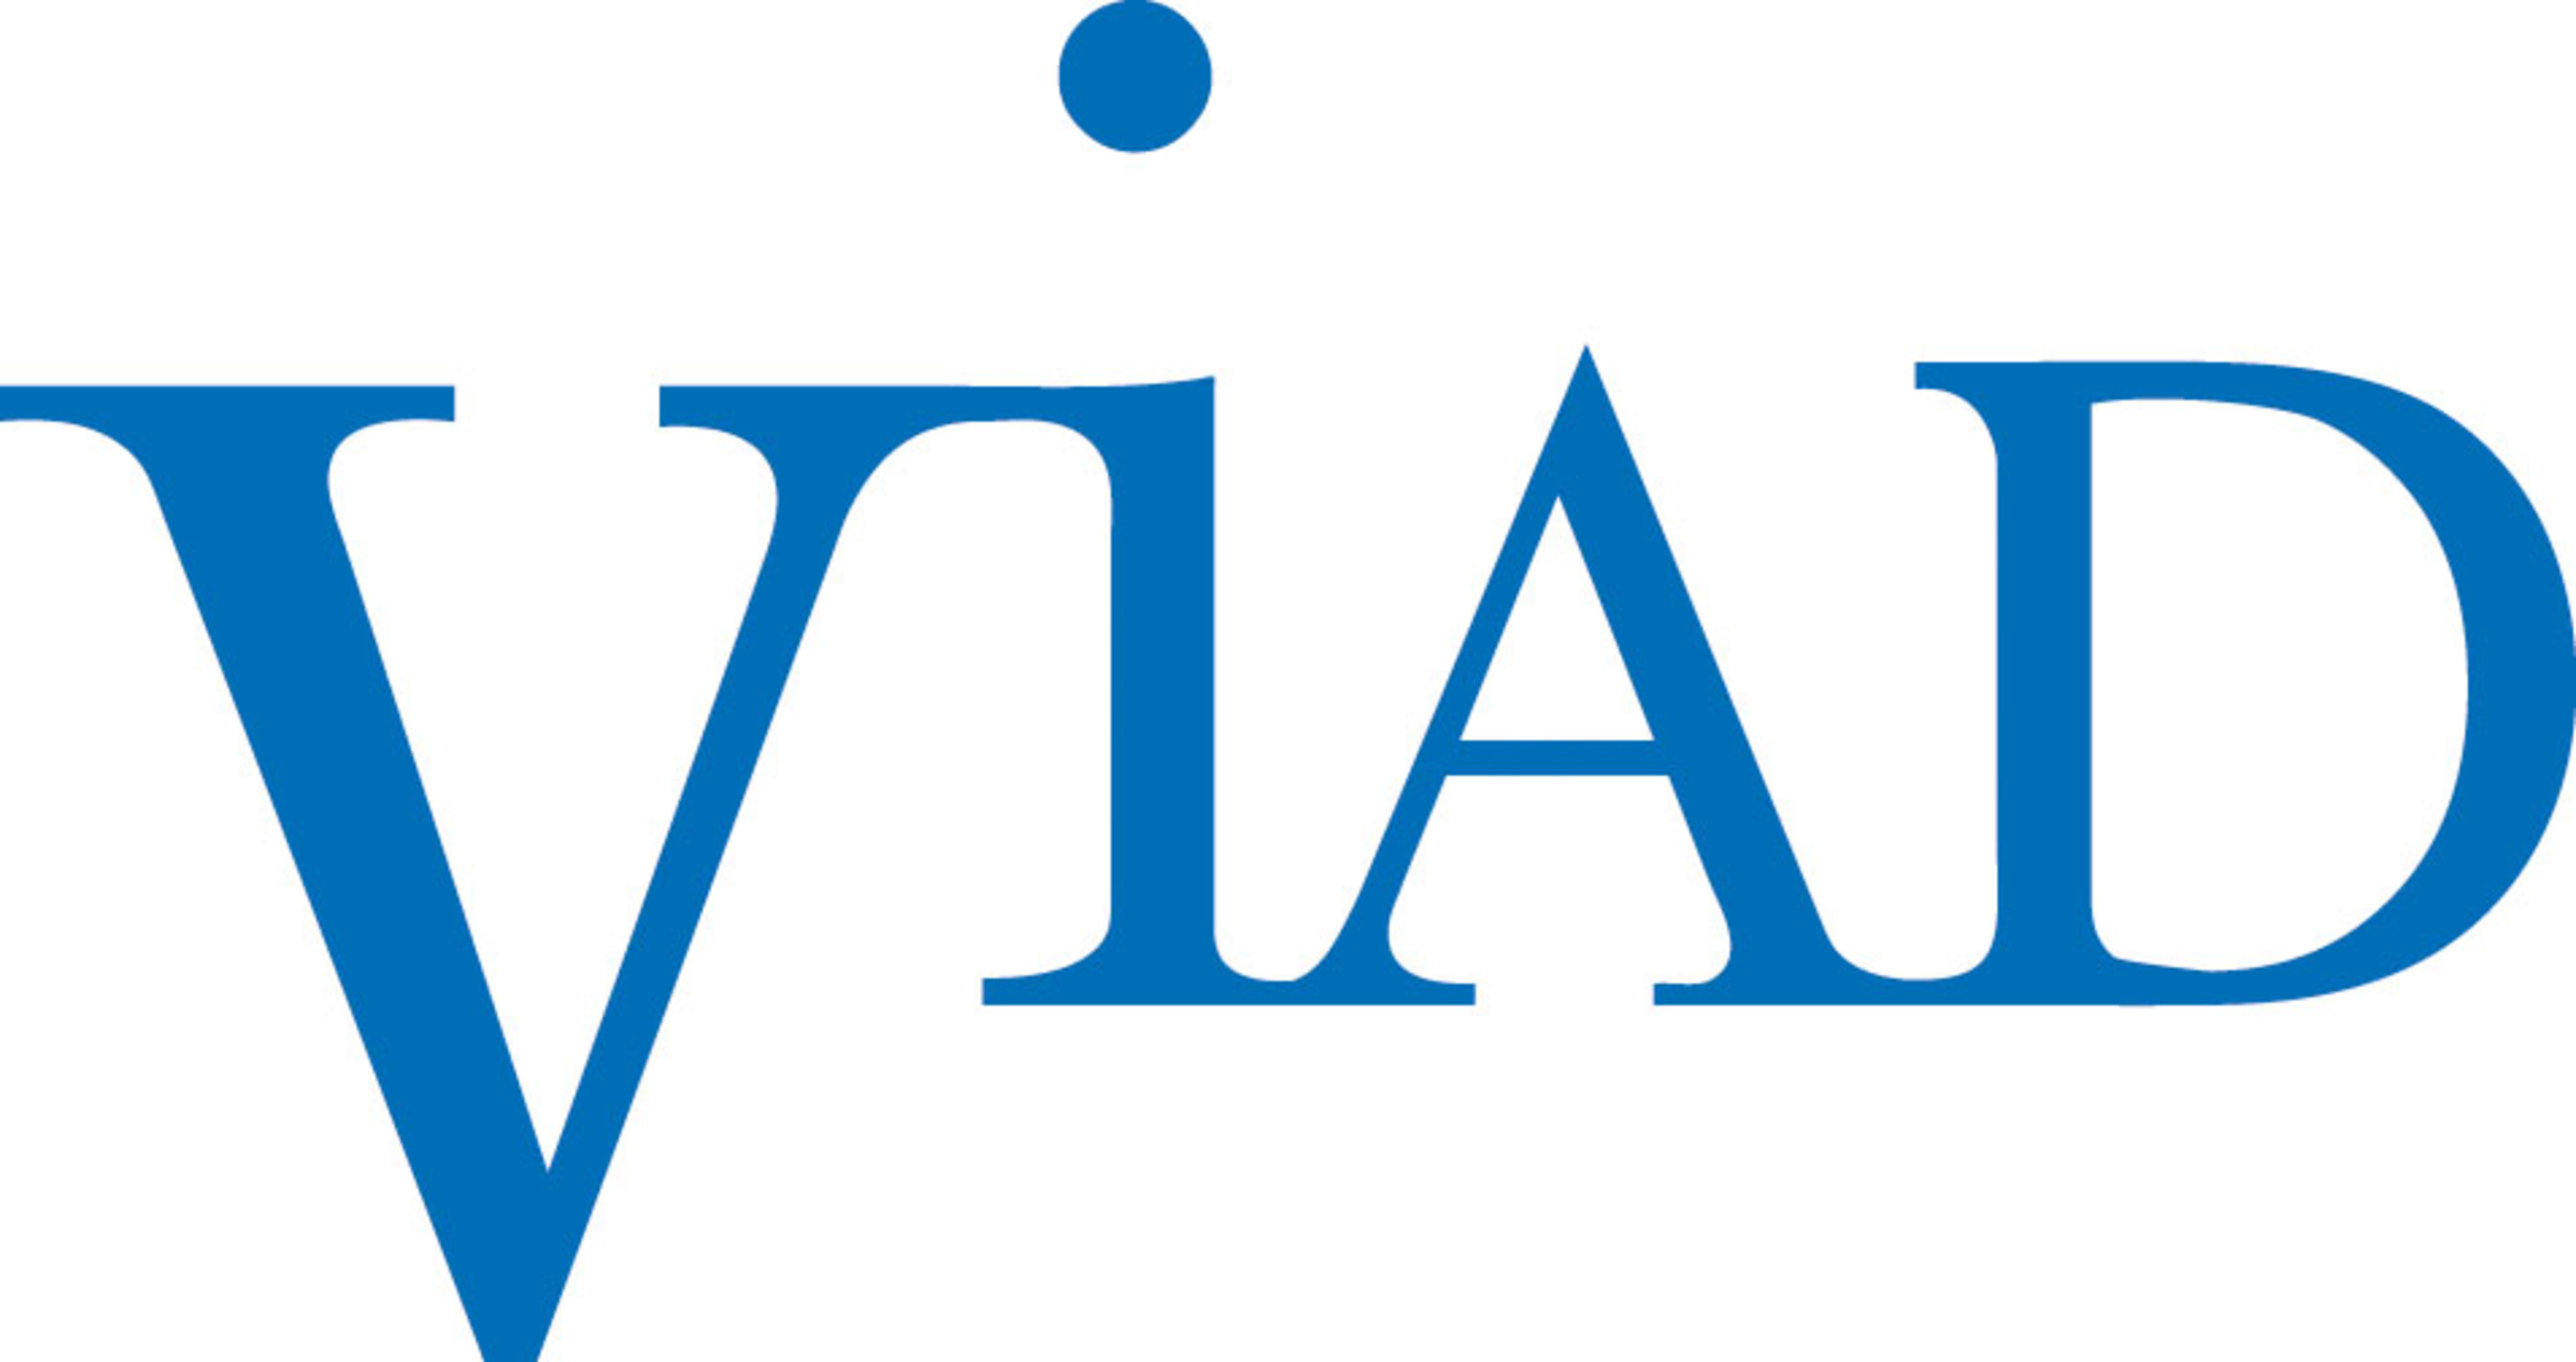 Viad Logo.